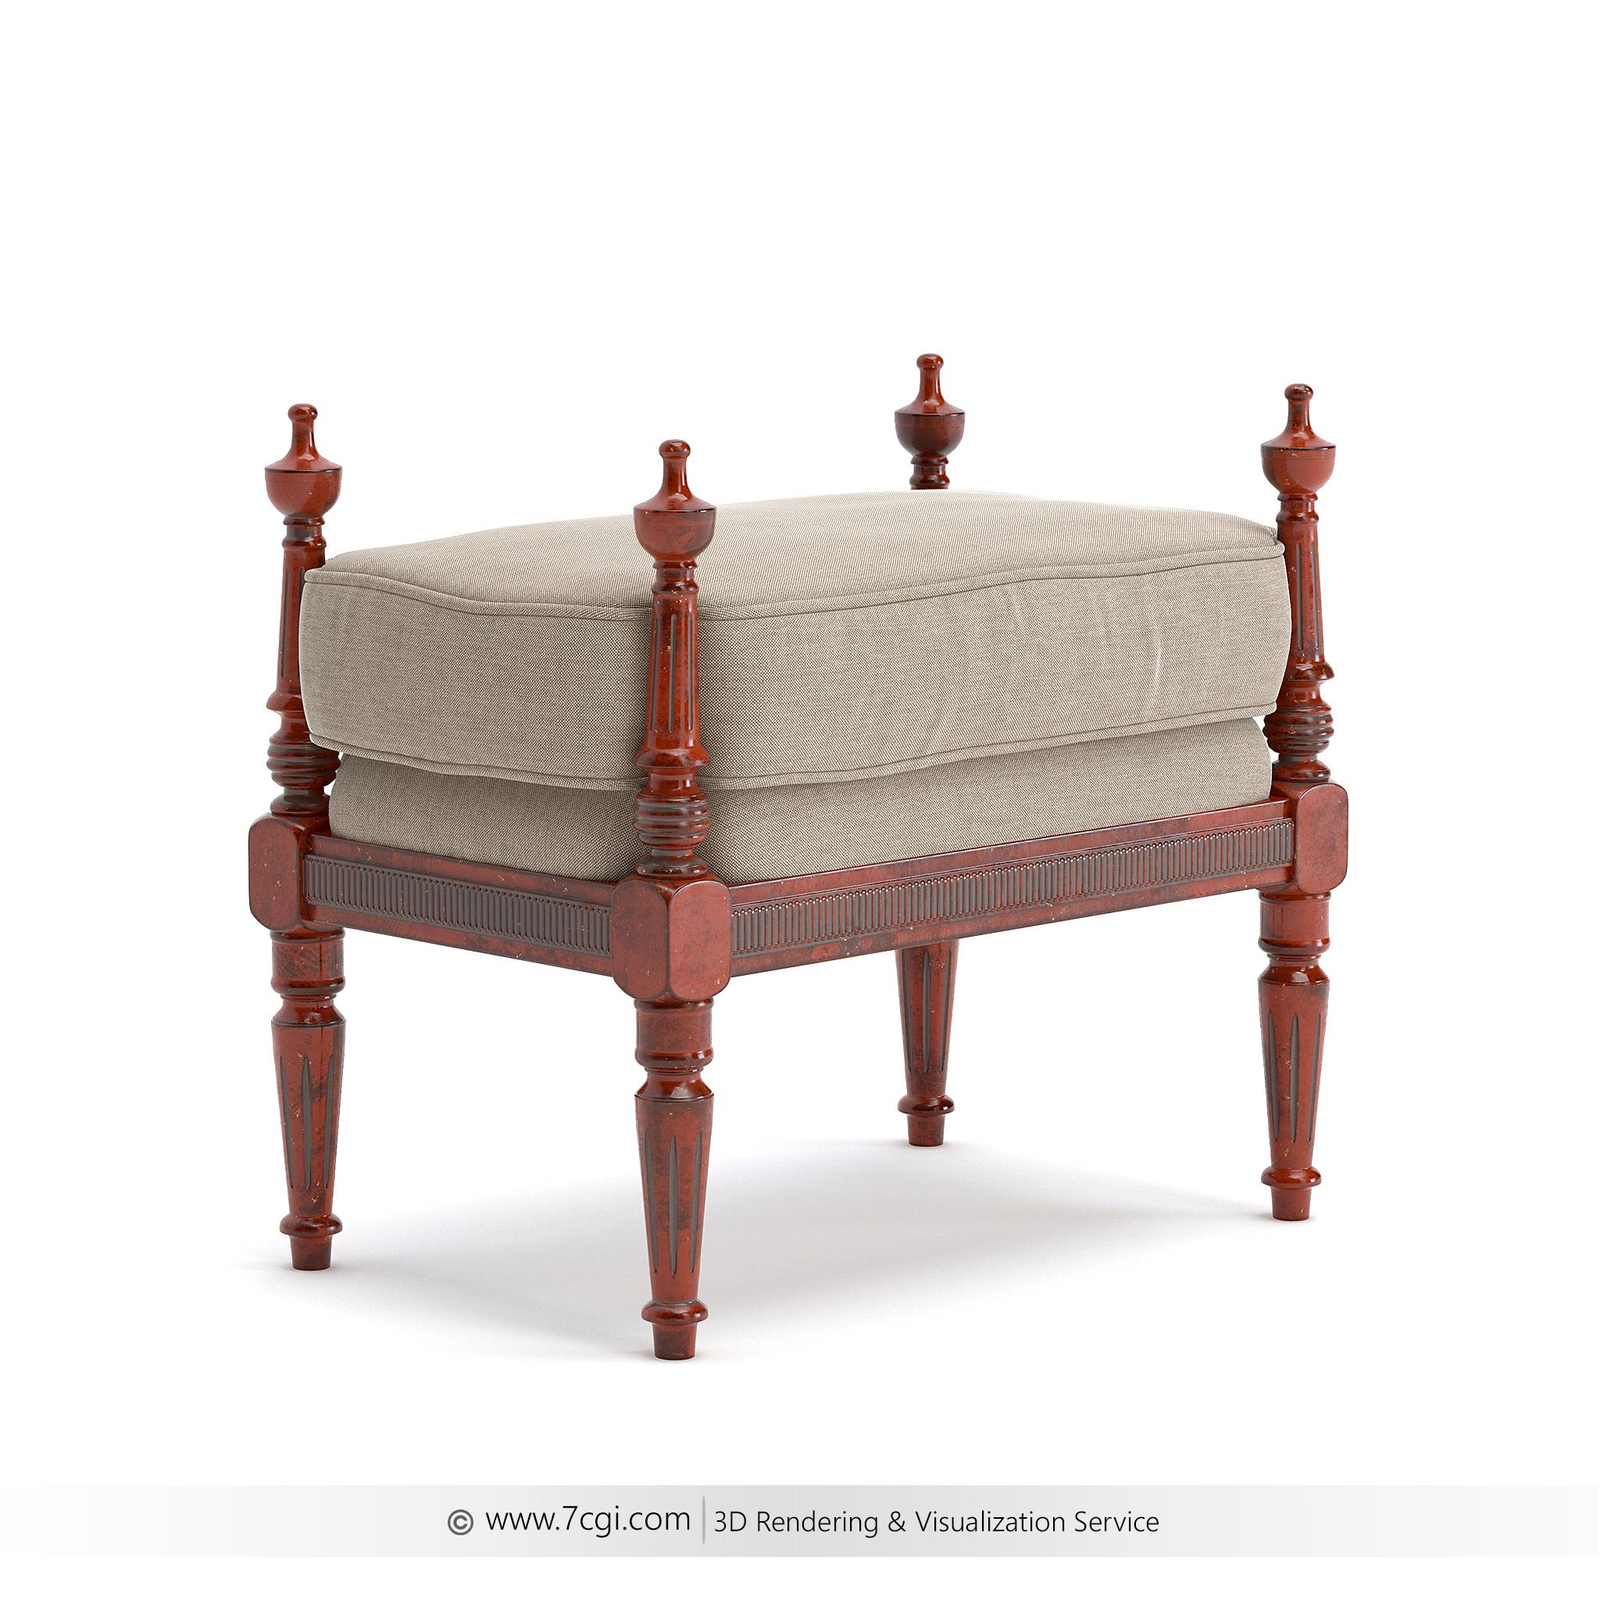 Antique Furniture 3D Modeling and Rendering